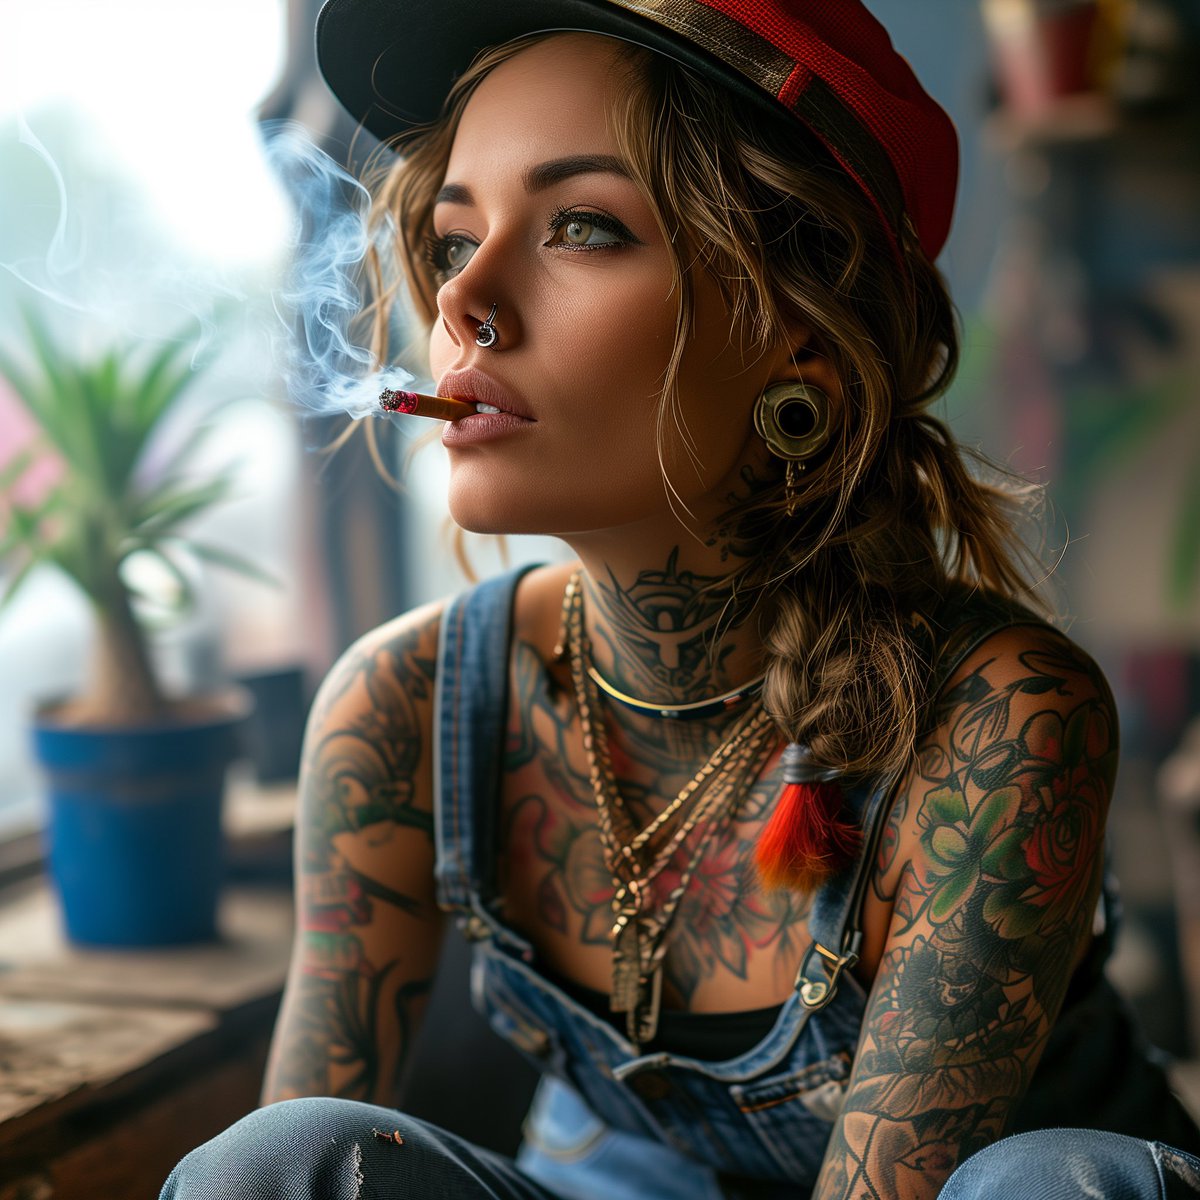 Contemplation Through Ink and Smoke

#Portrait #Tattoos #UrbanStyle #Smoke